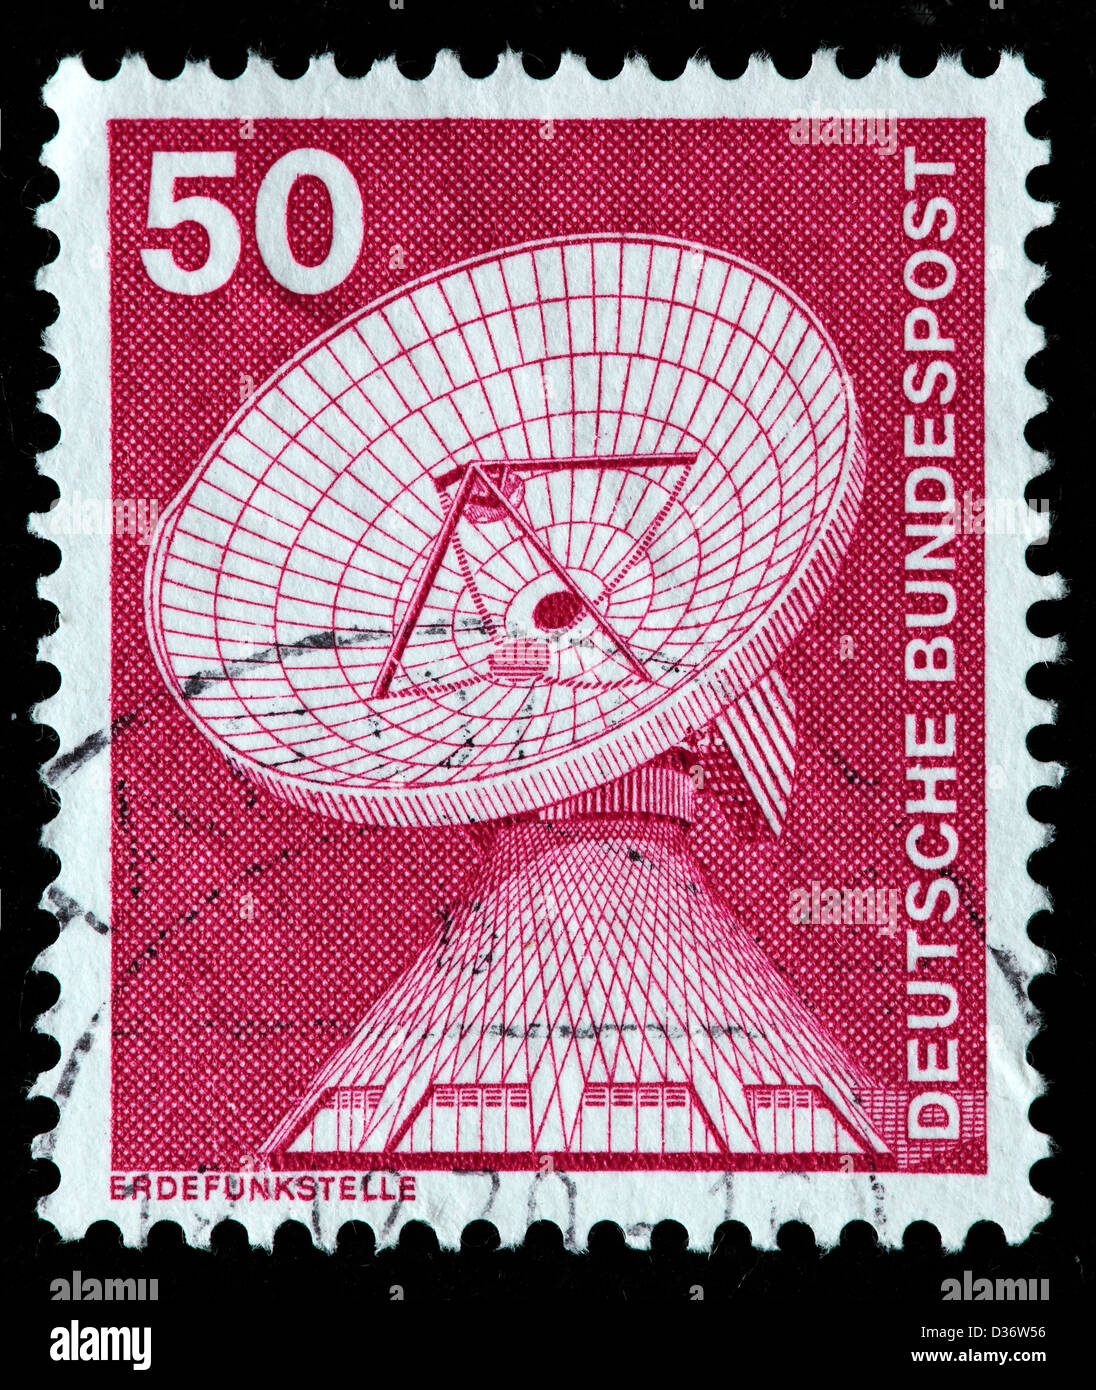 Station de radar, timbre-poste, Allemagne, 1975 Banque D'Images